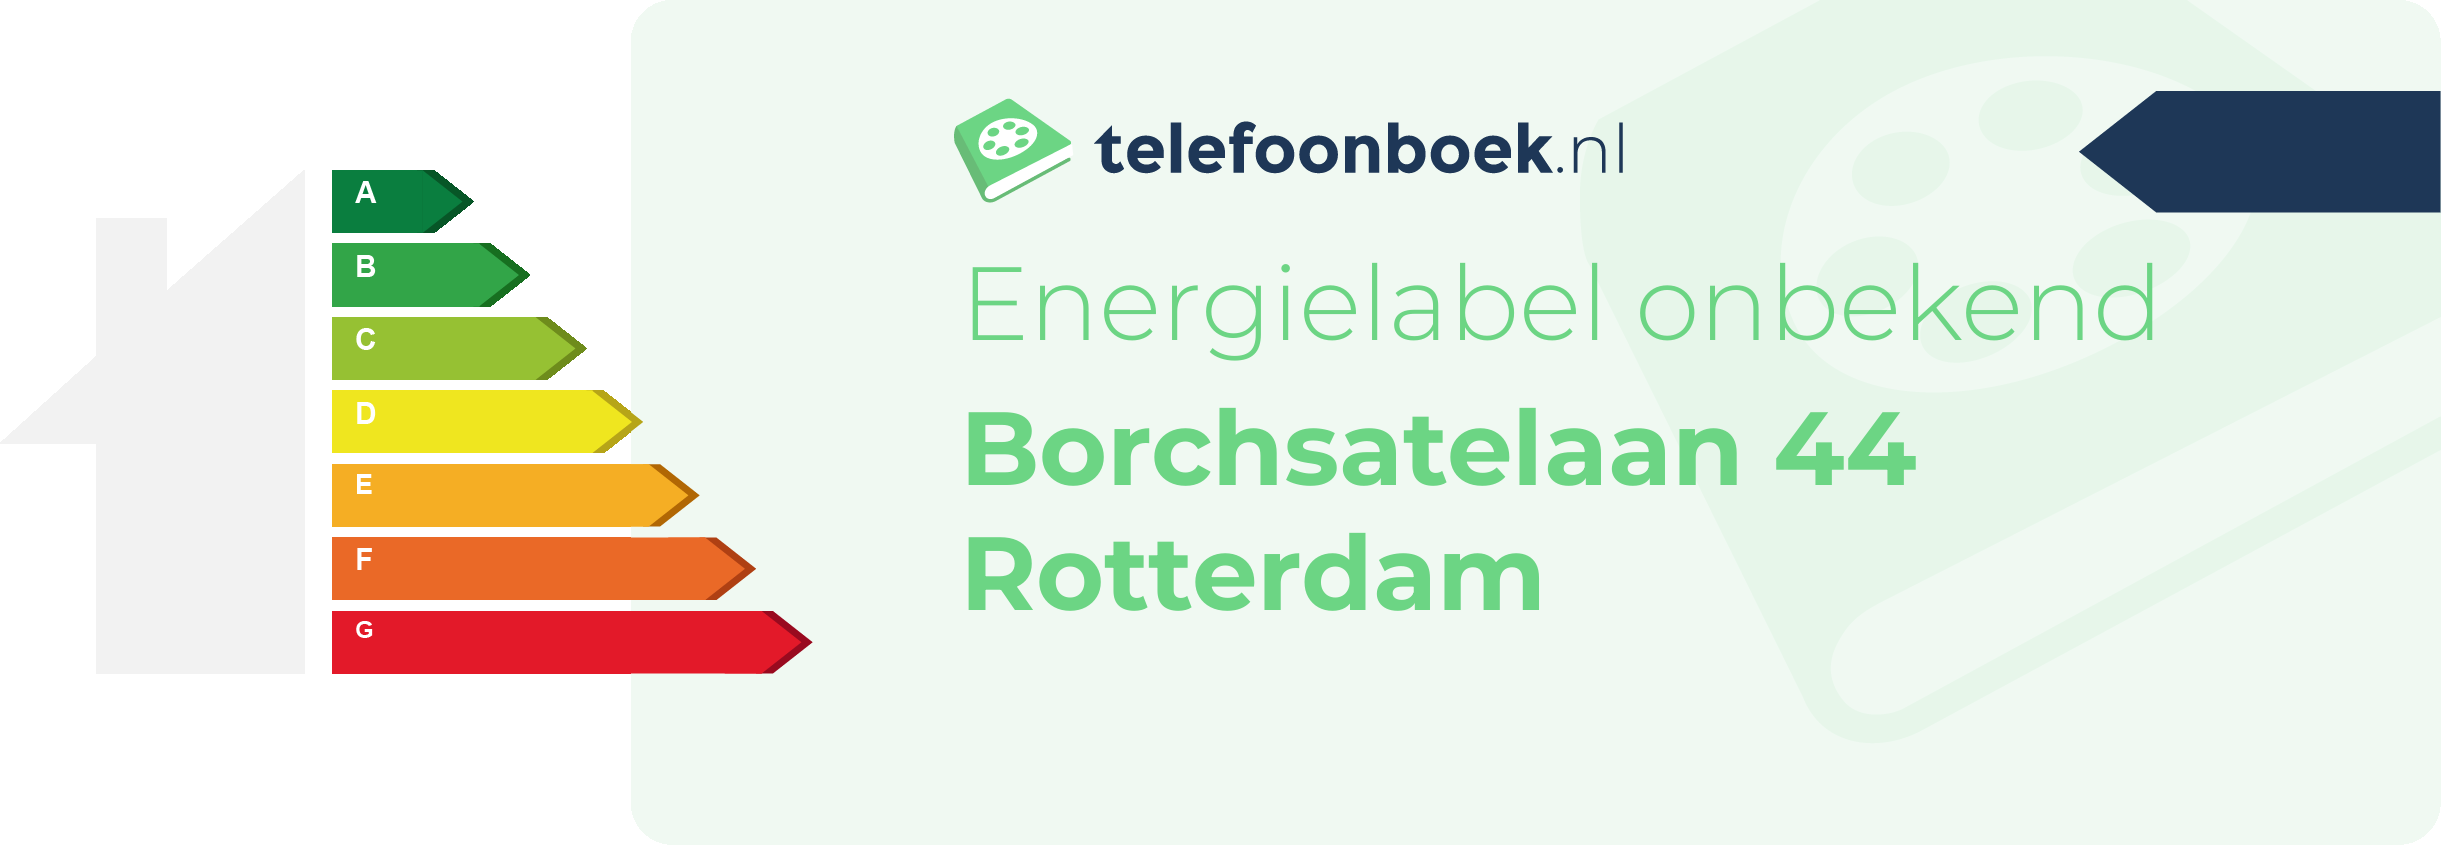 Energielabel Borchsatelaan 44 Rotterdam